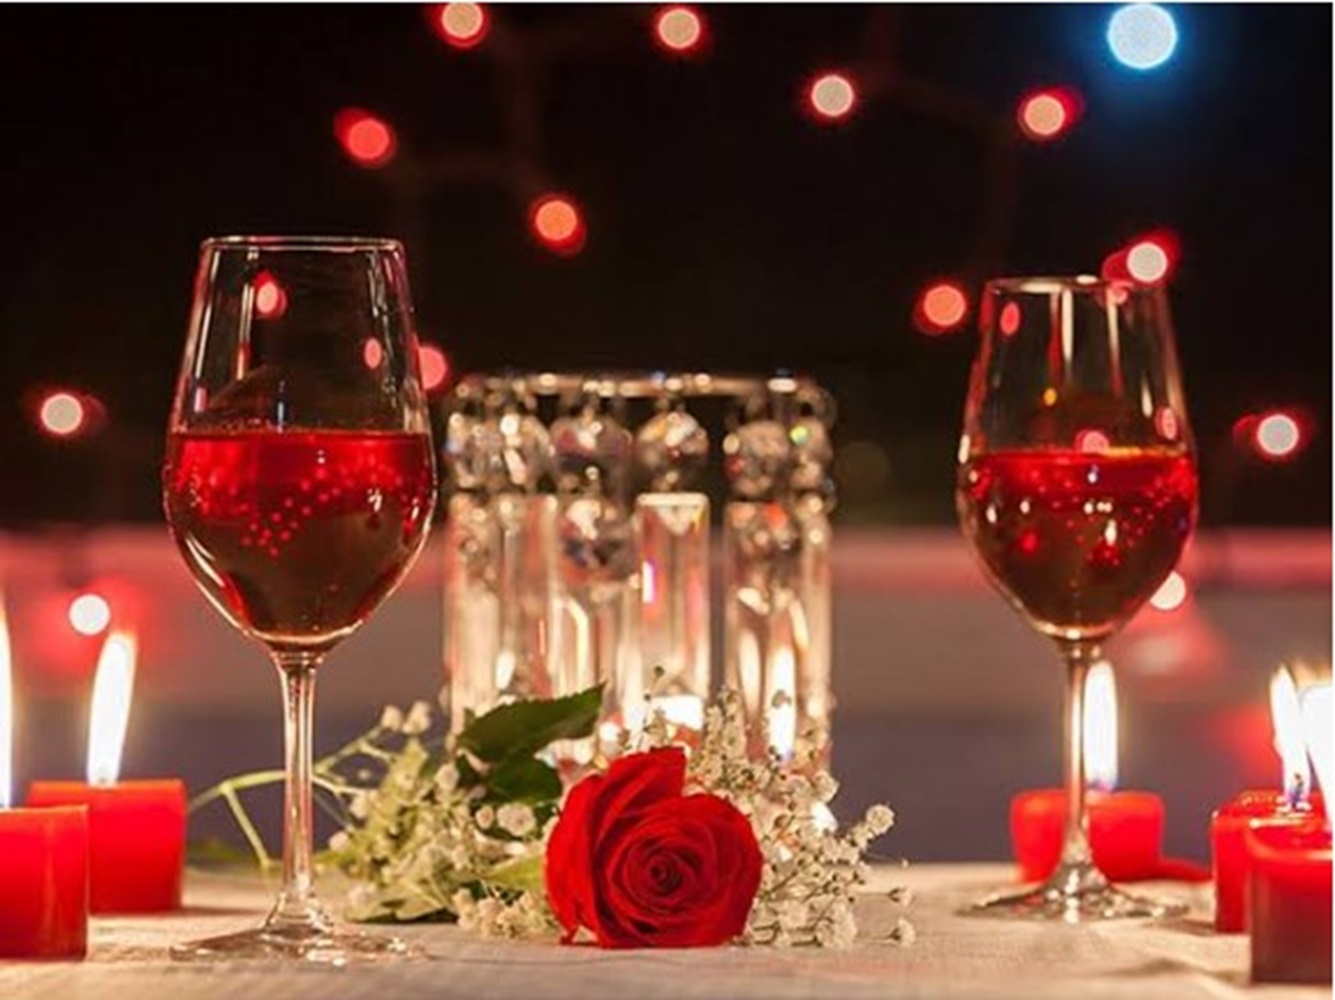 Rayakan Hari Valentine dengan Sentuhan Romantis, Jangan Lupa Memberi Hadiah